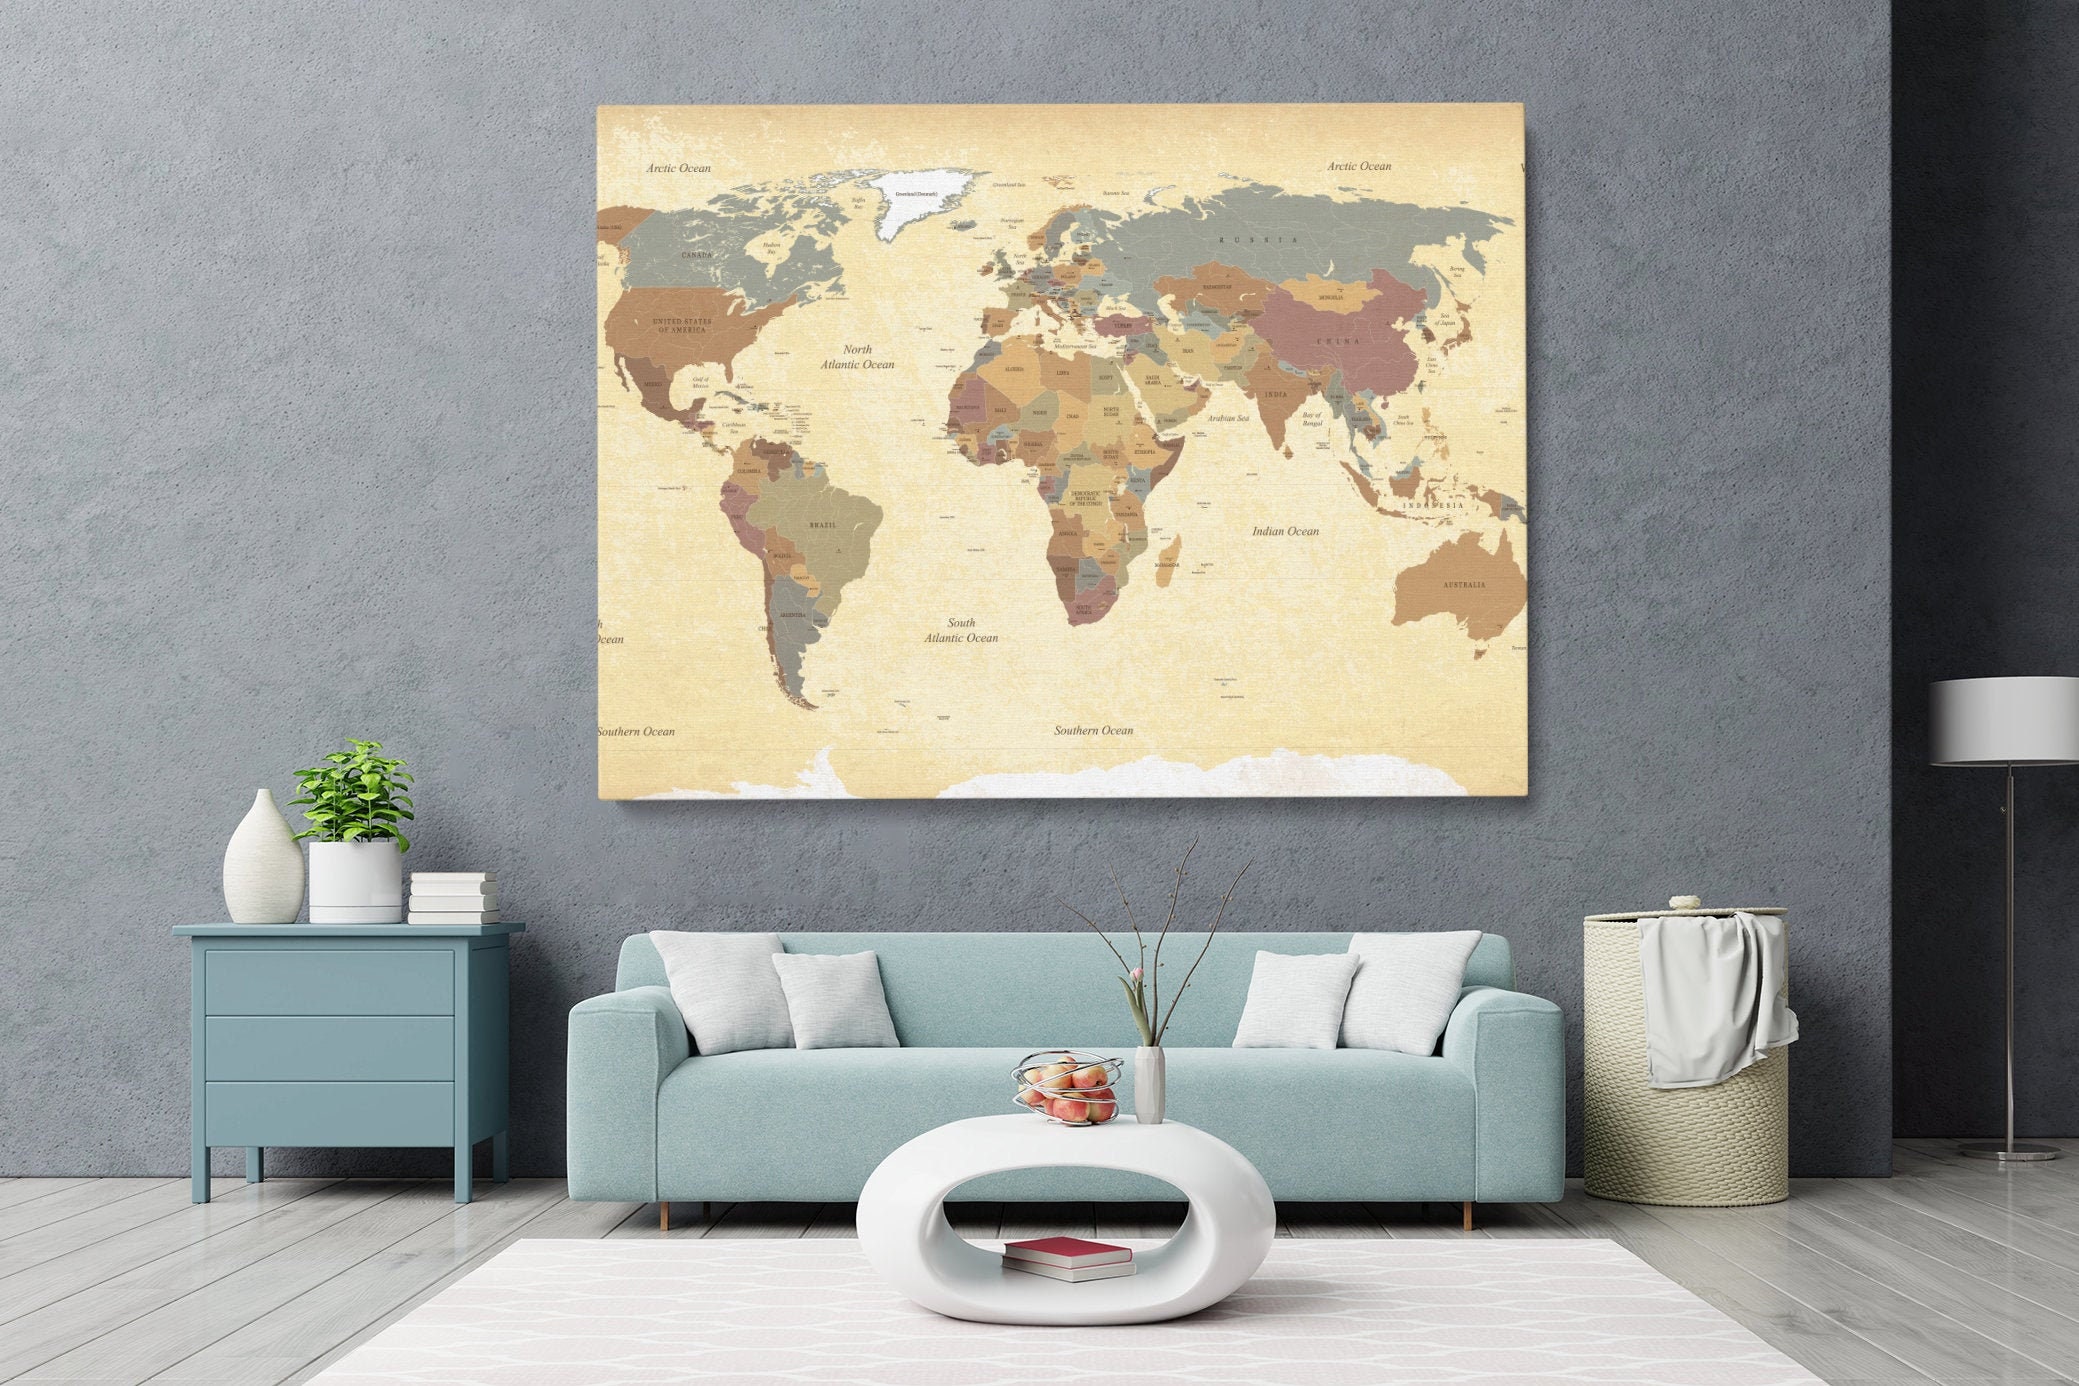 world map living room